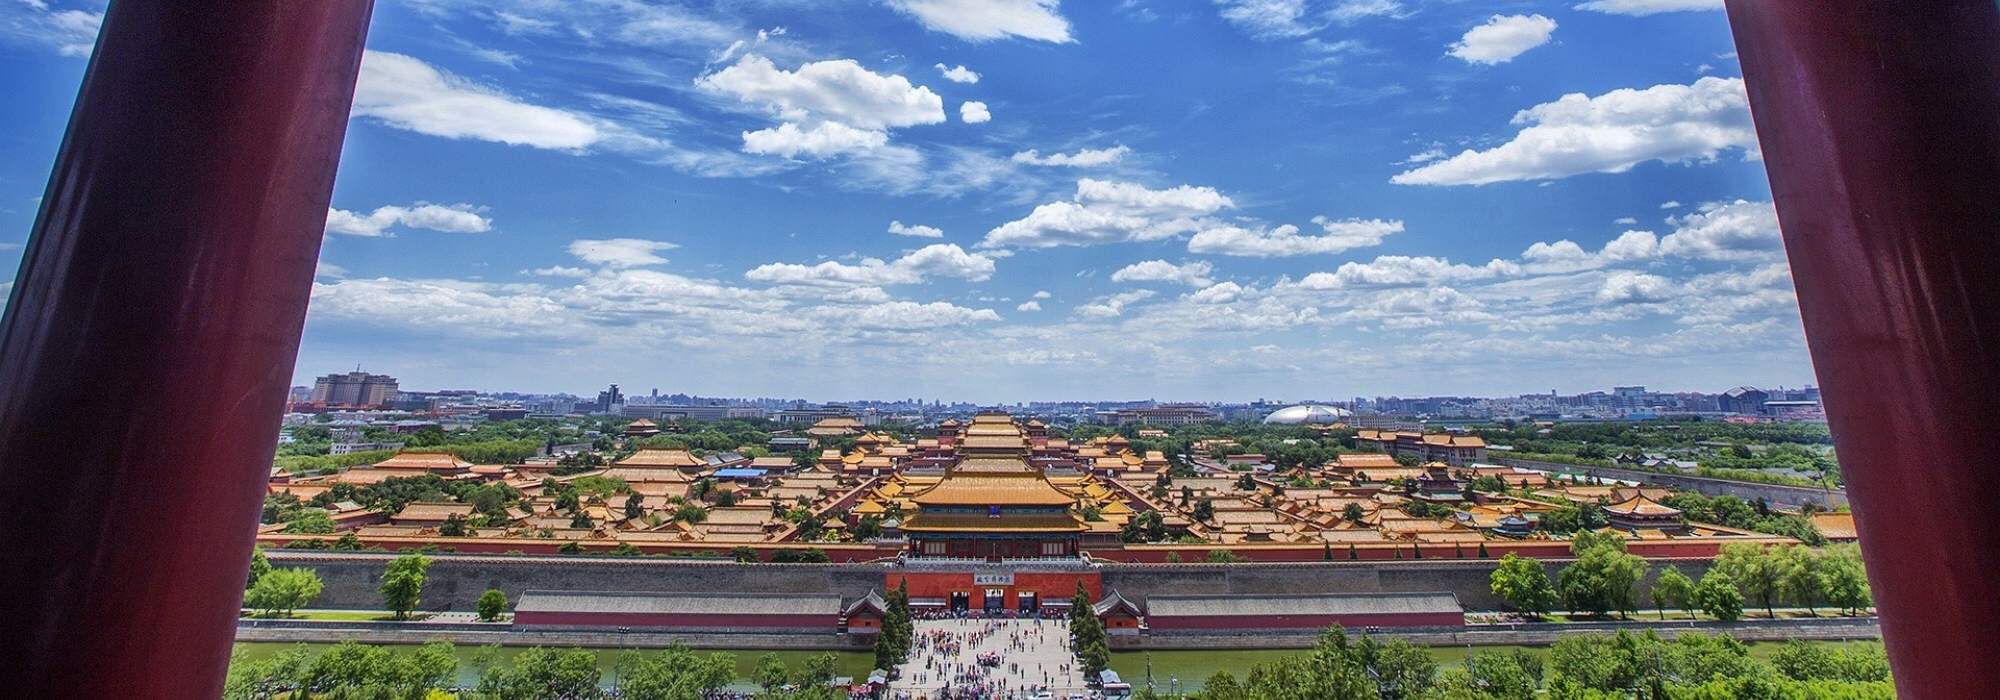 Beijing Jingshan Park the forbidden city